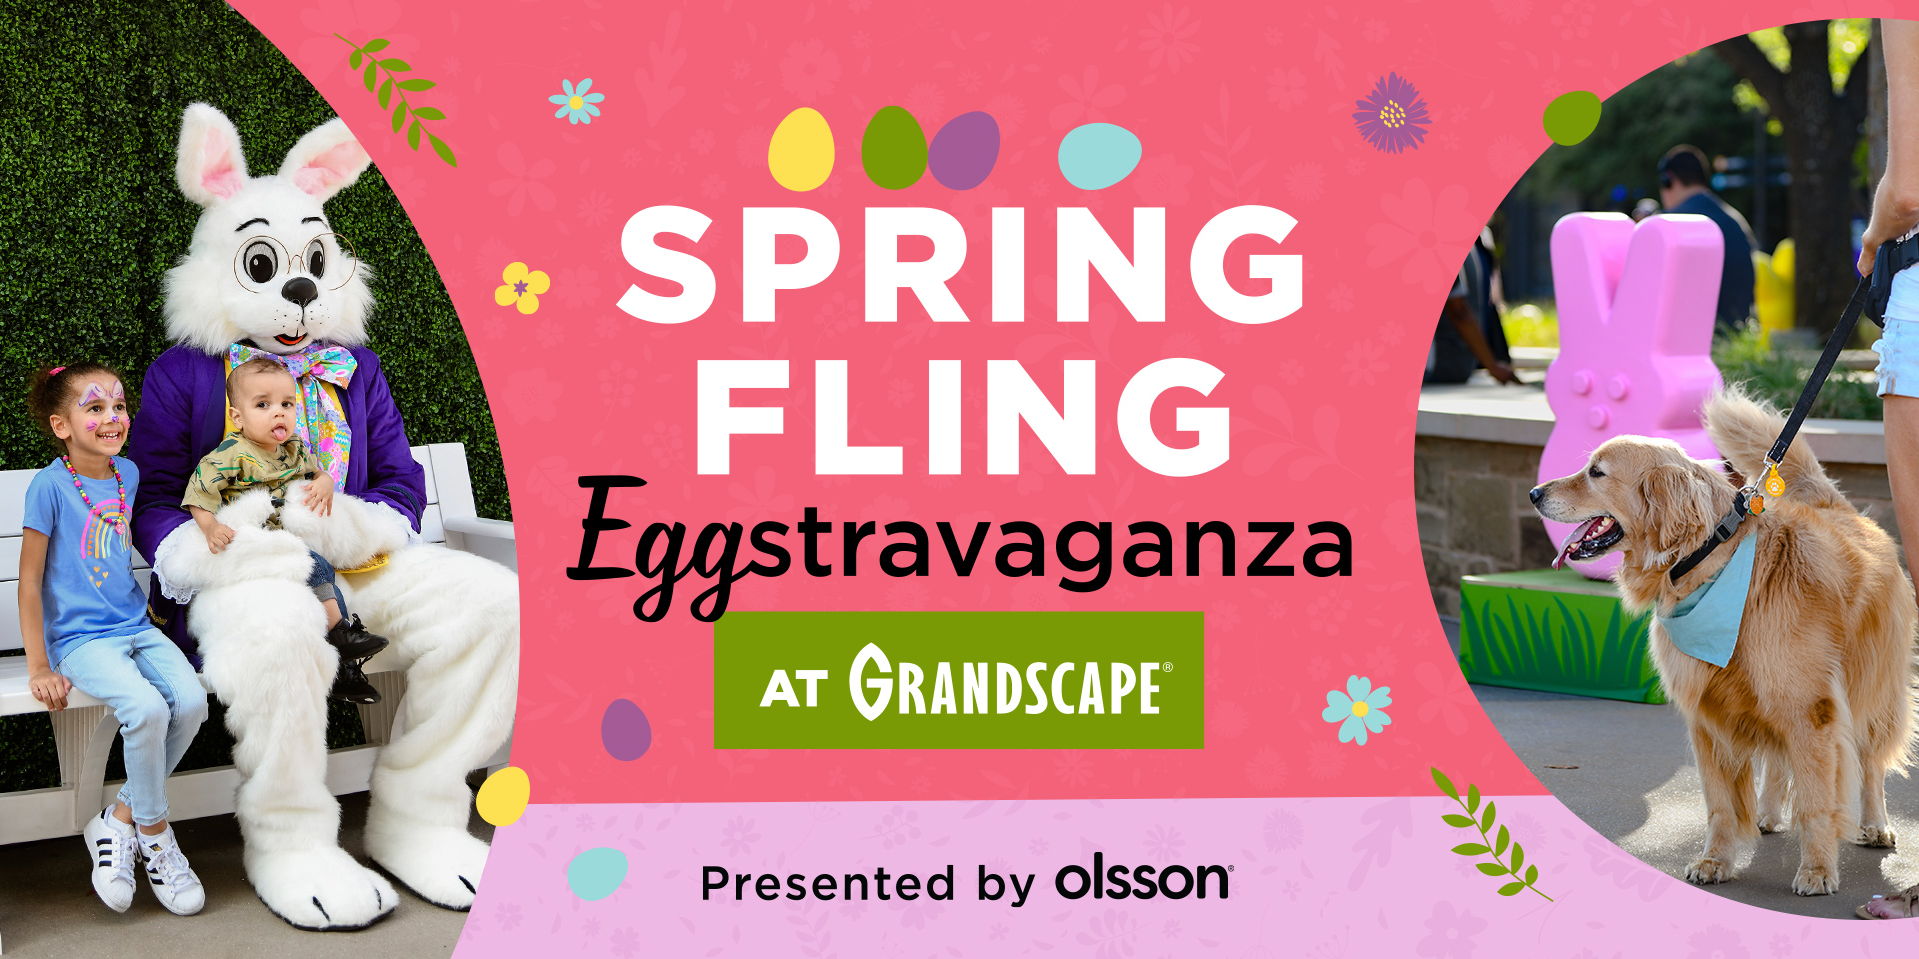 Spring Fling Eggstravaganza promotional image